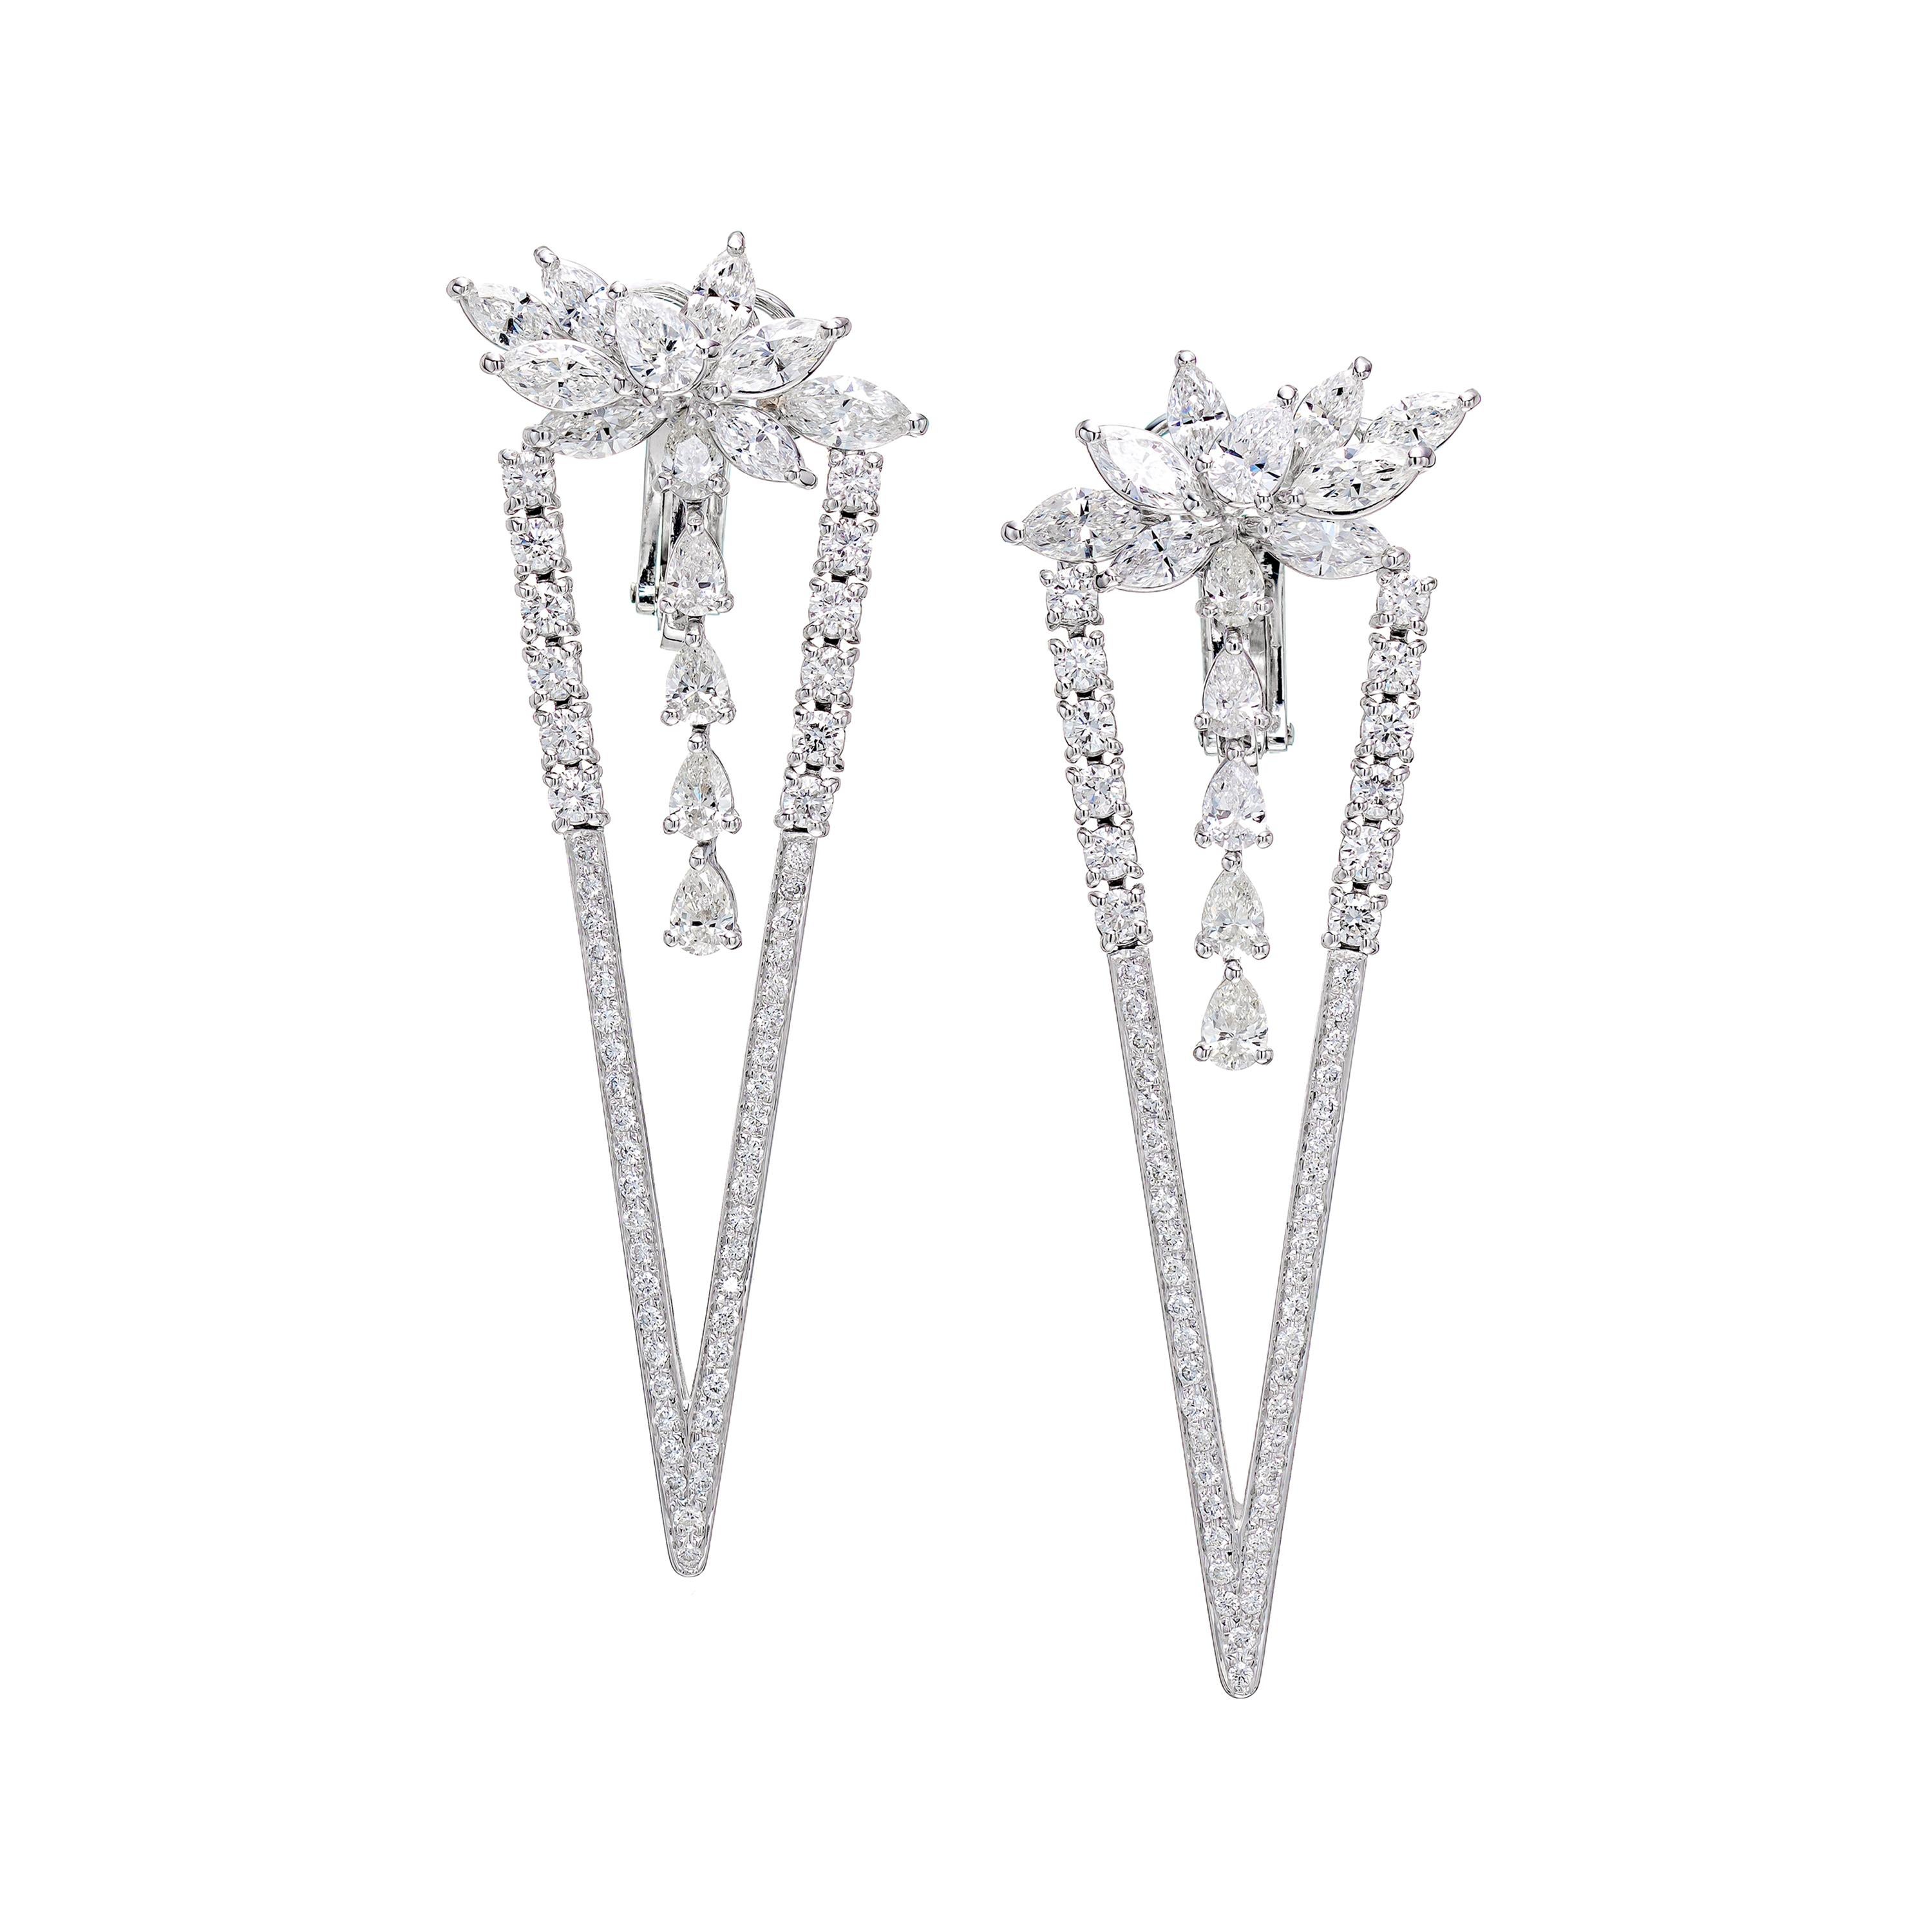 4.88 Carat Diamond Wings Triangle Earrings in 18k White Gold For Sale